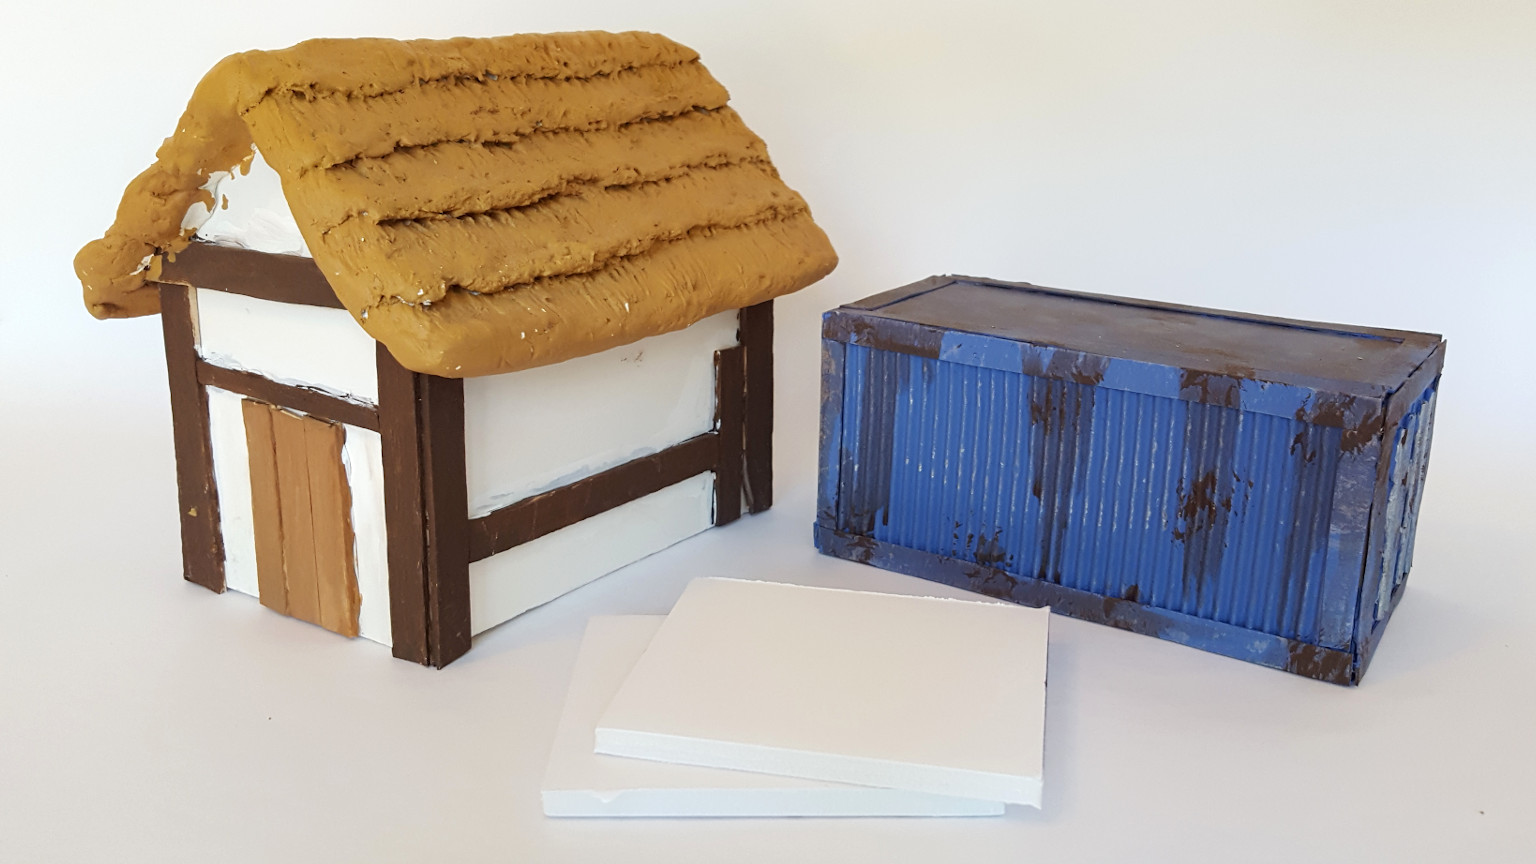 How to Easily Make XPS Foam Look Like Wood  Wargaming Building Scenery  Terrain Tutorial 